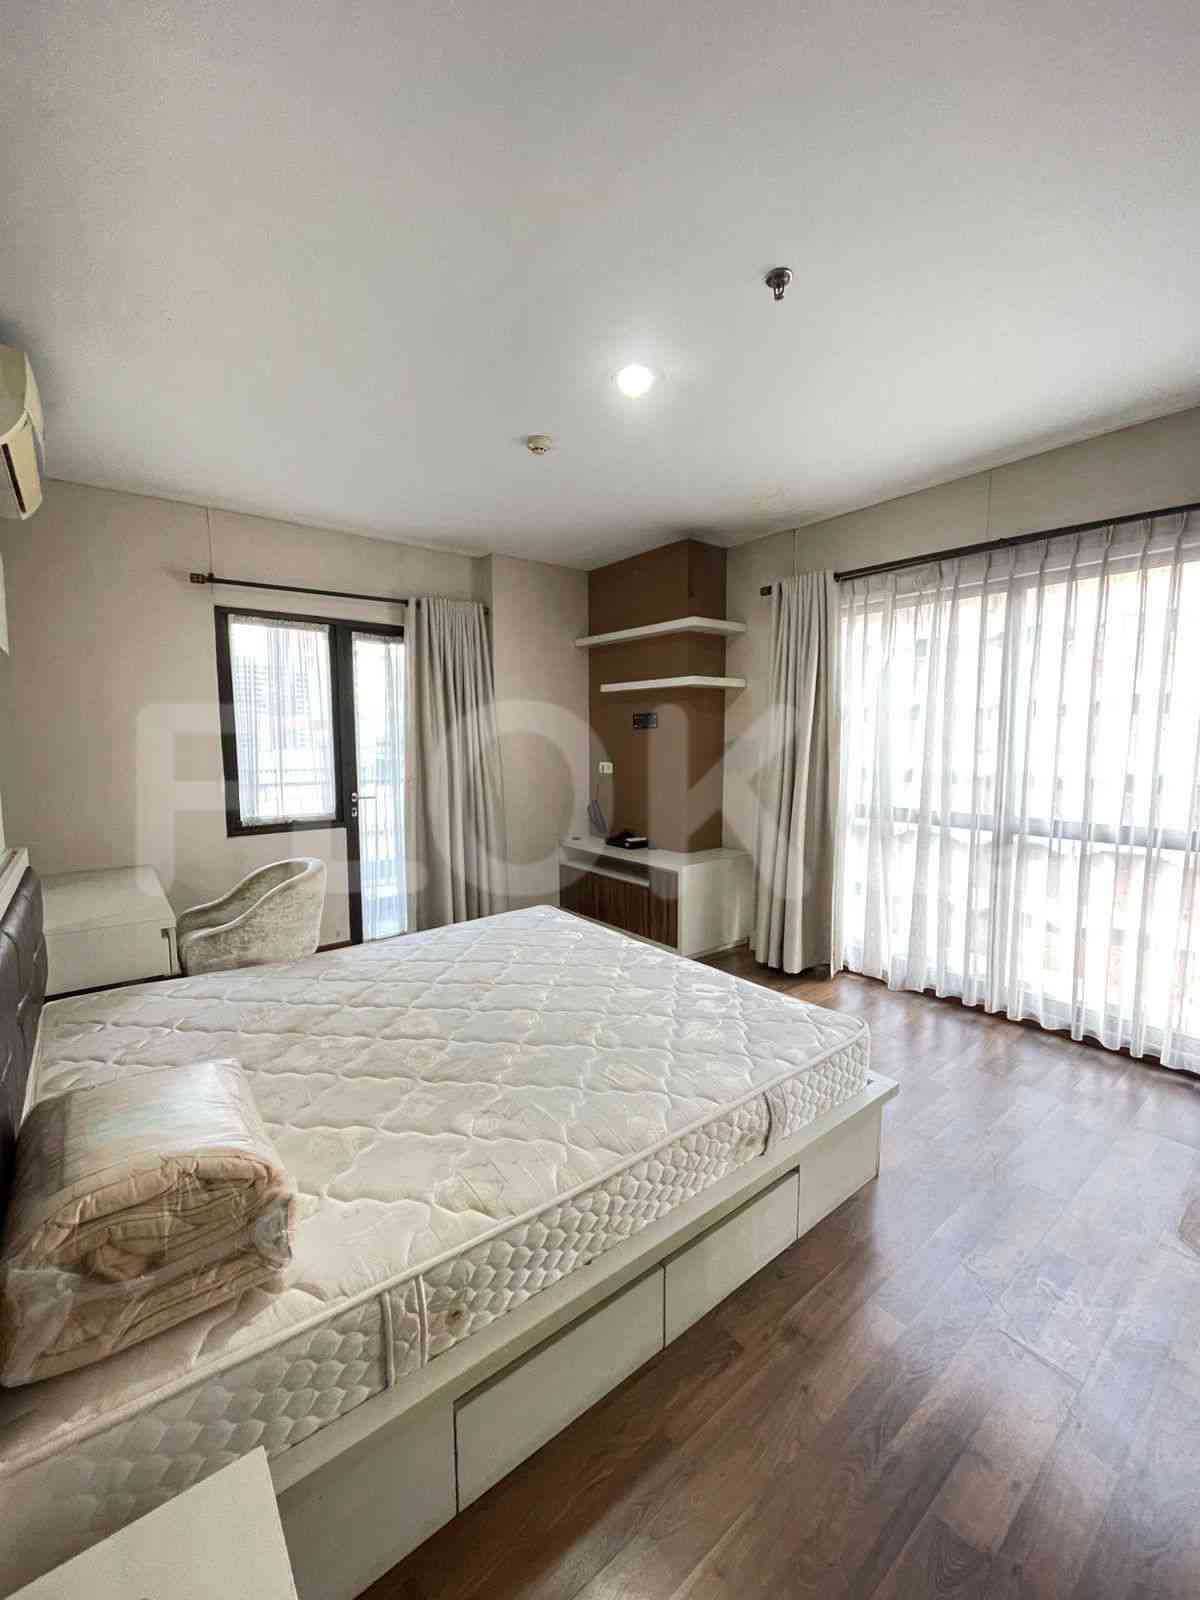 2 Bedroom on 8th Floor for Rent in Tamansari Semanggi Apartment - fsu124 3